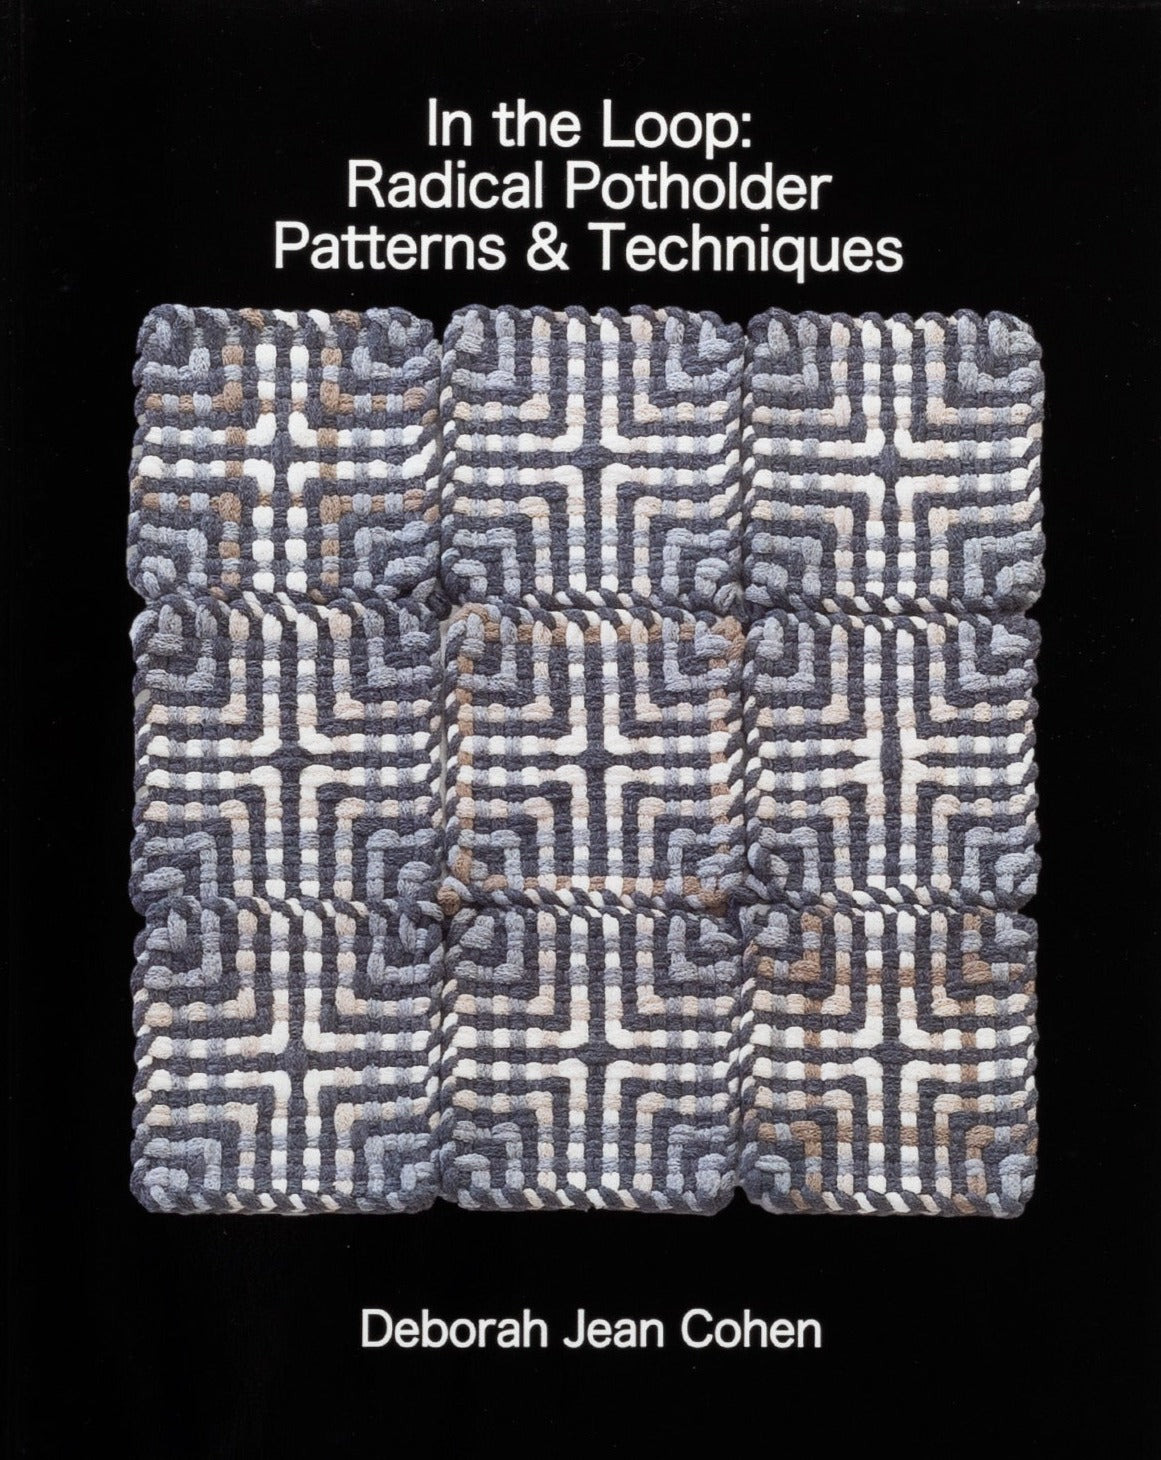 Limited-Edition Potholder Kit – Harrisville Designs, Inc.